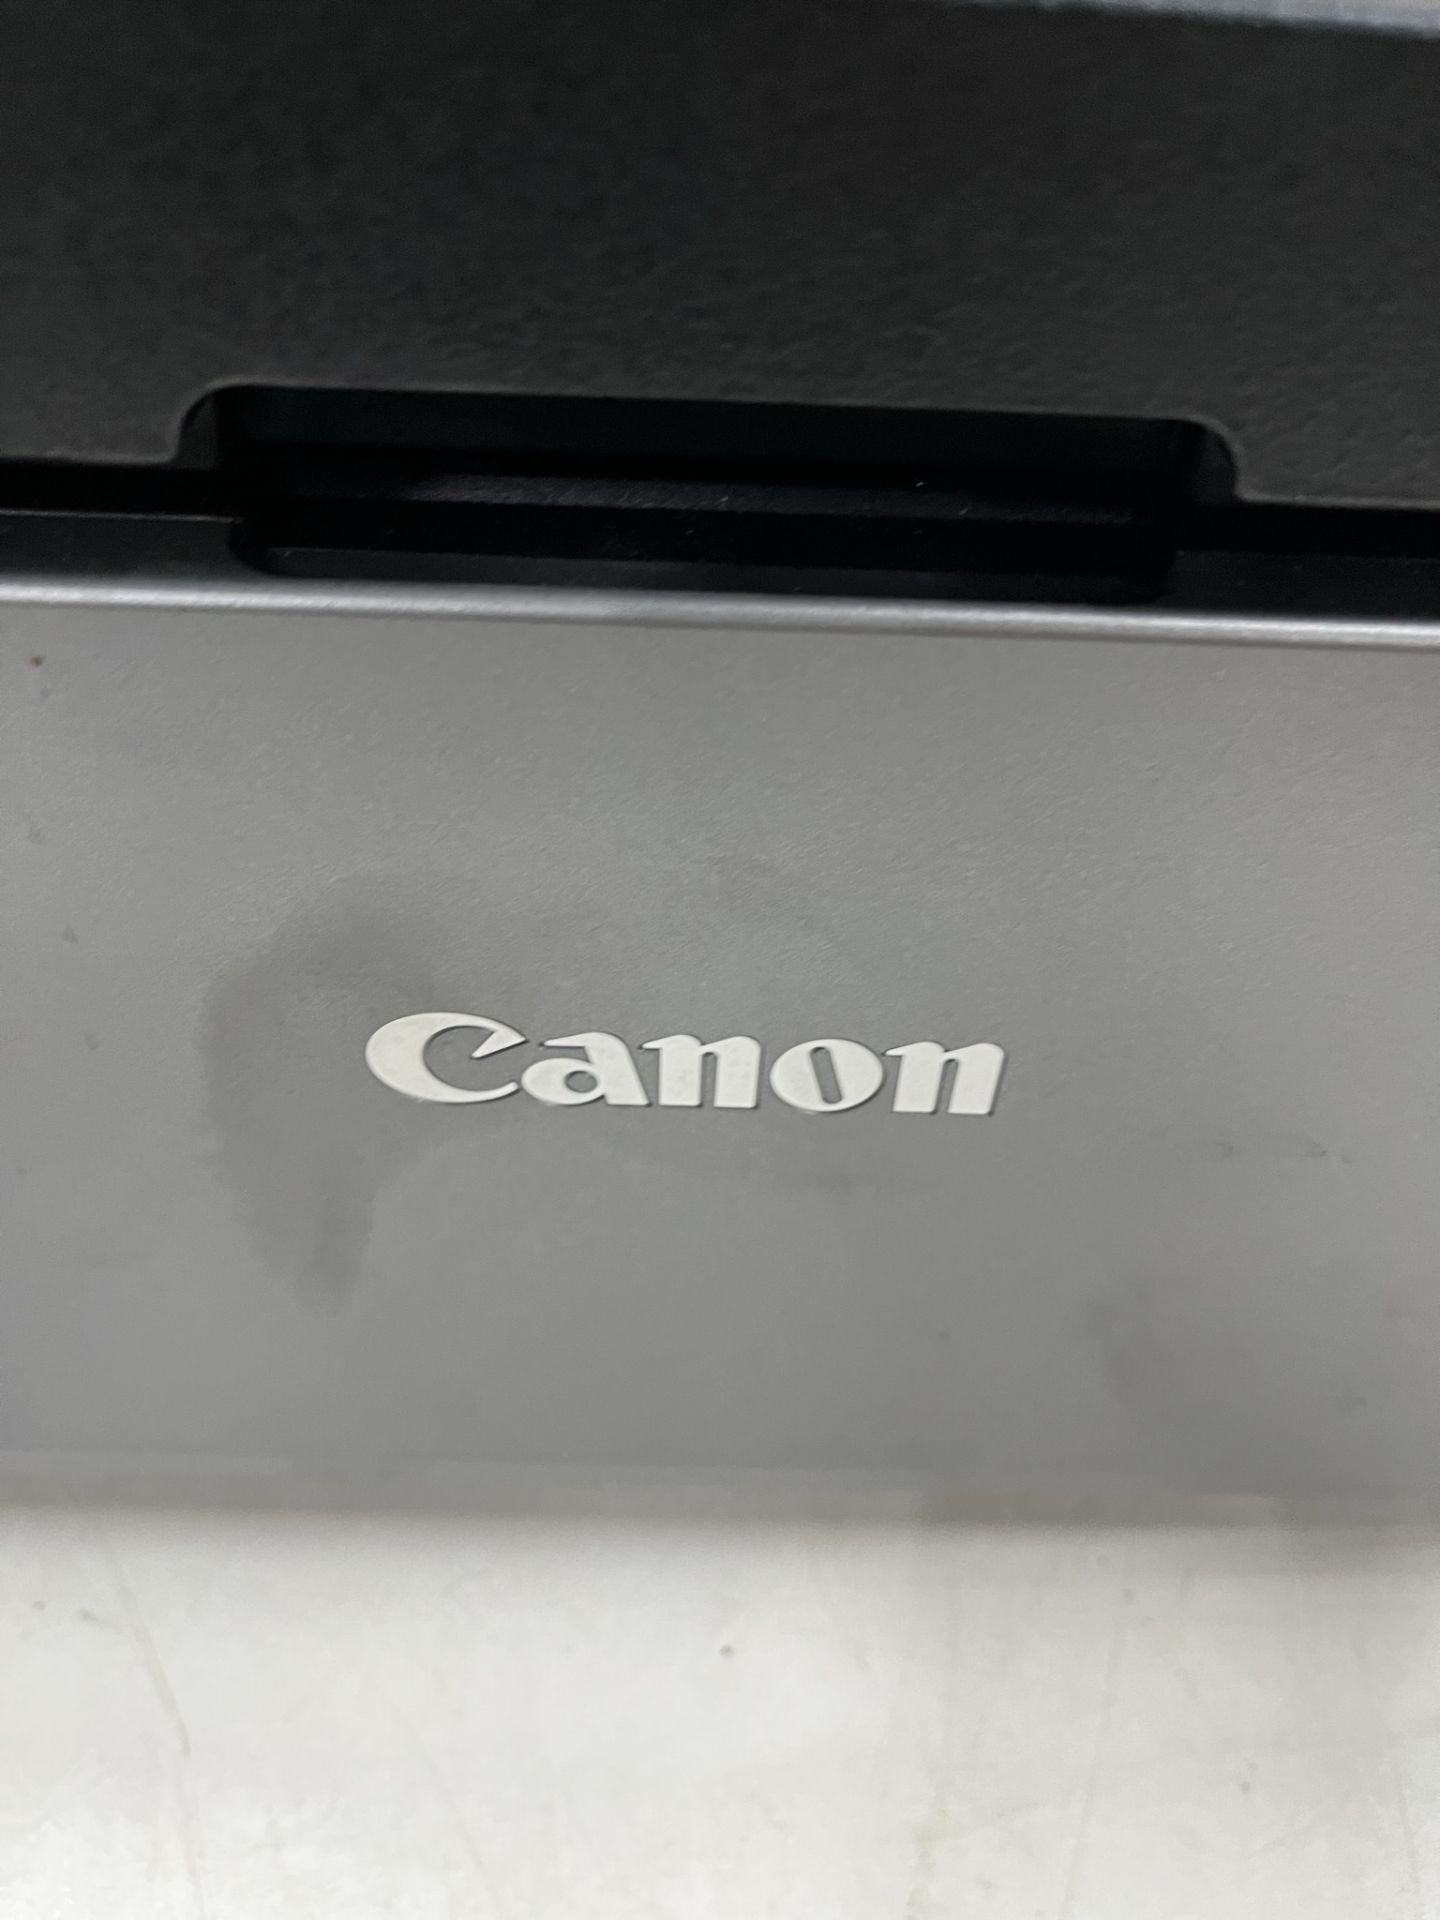 Cannon K10377 Multifunction Printer - Image 7 of 14